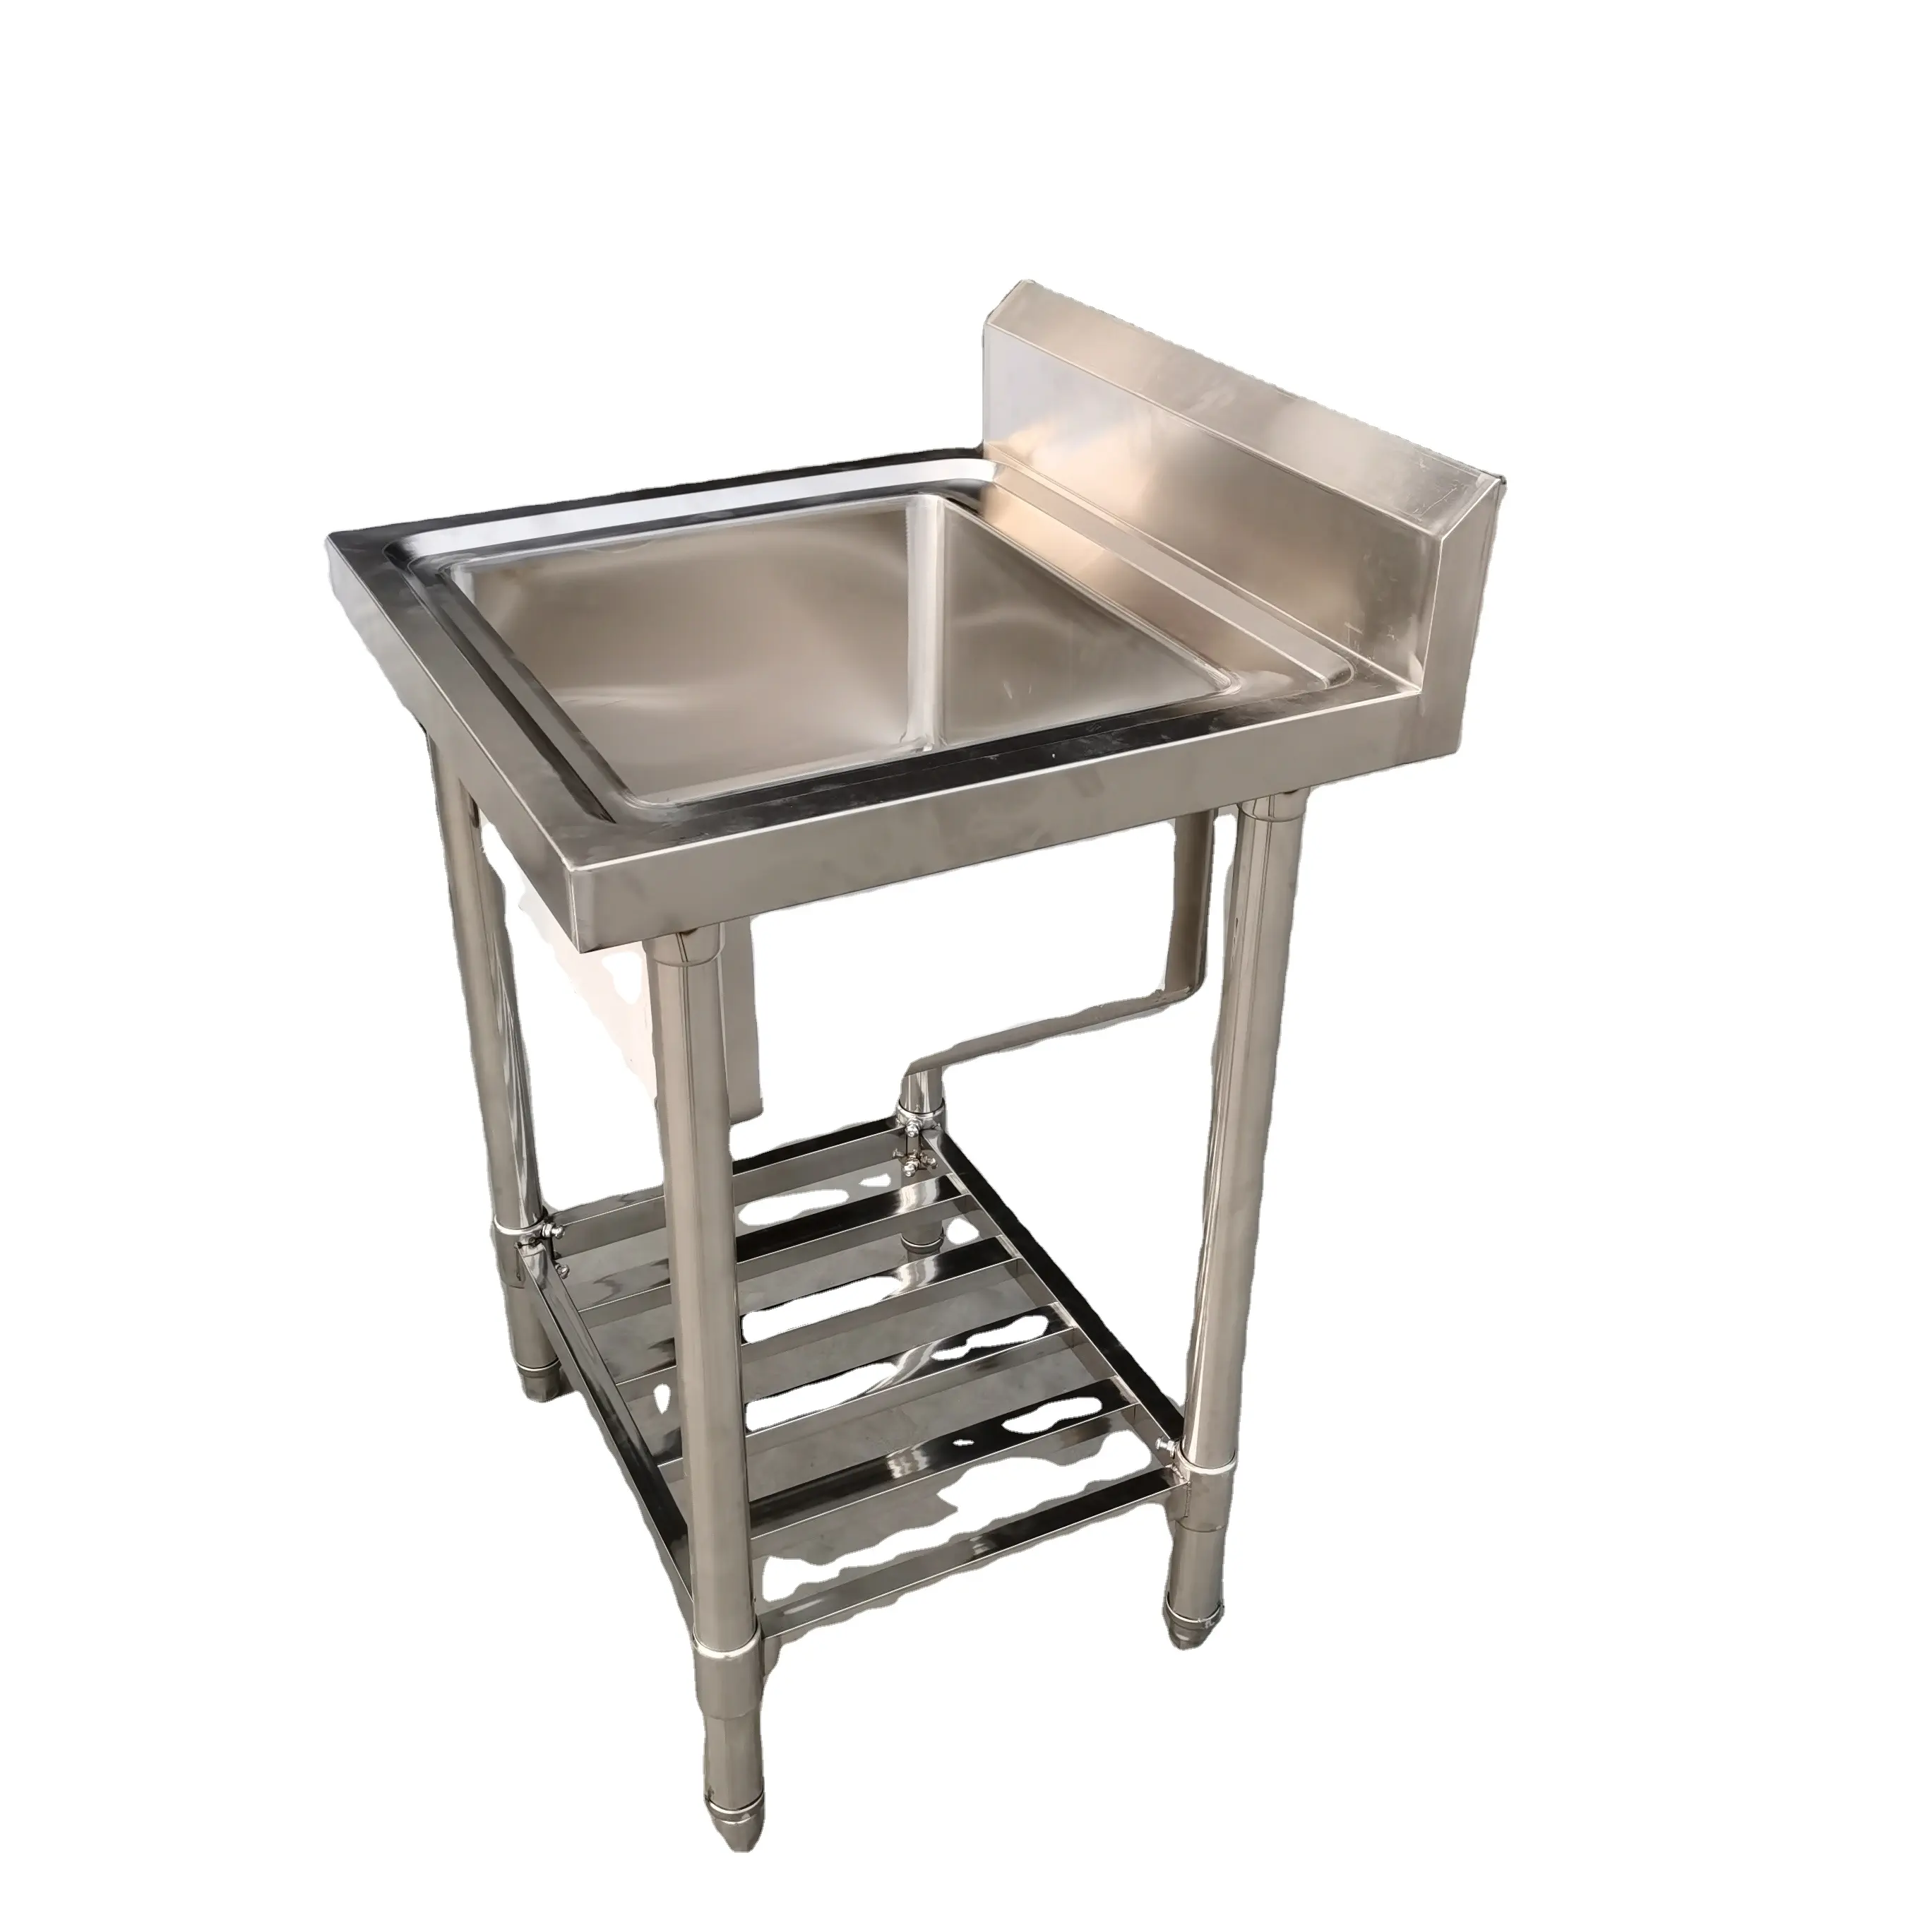 Fregadero de acero inoxidable BOHAI, fregadero de cocina individual de tazón profundo para suministros de Hotel y restaurante